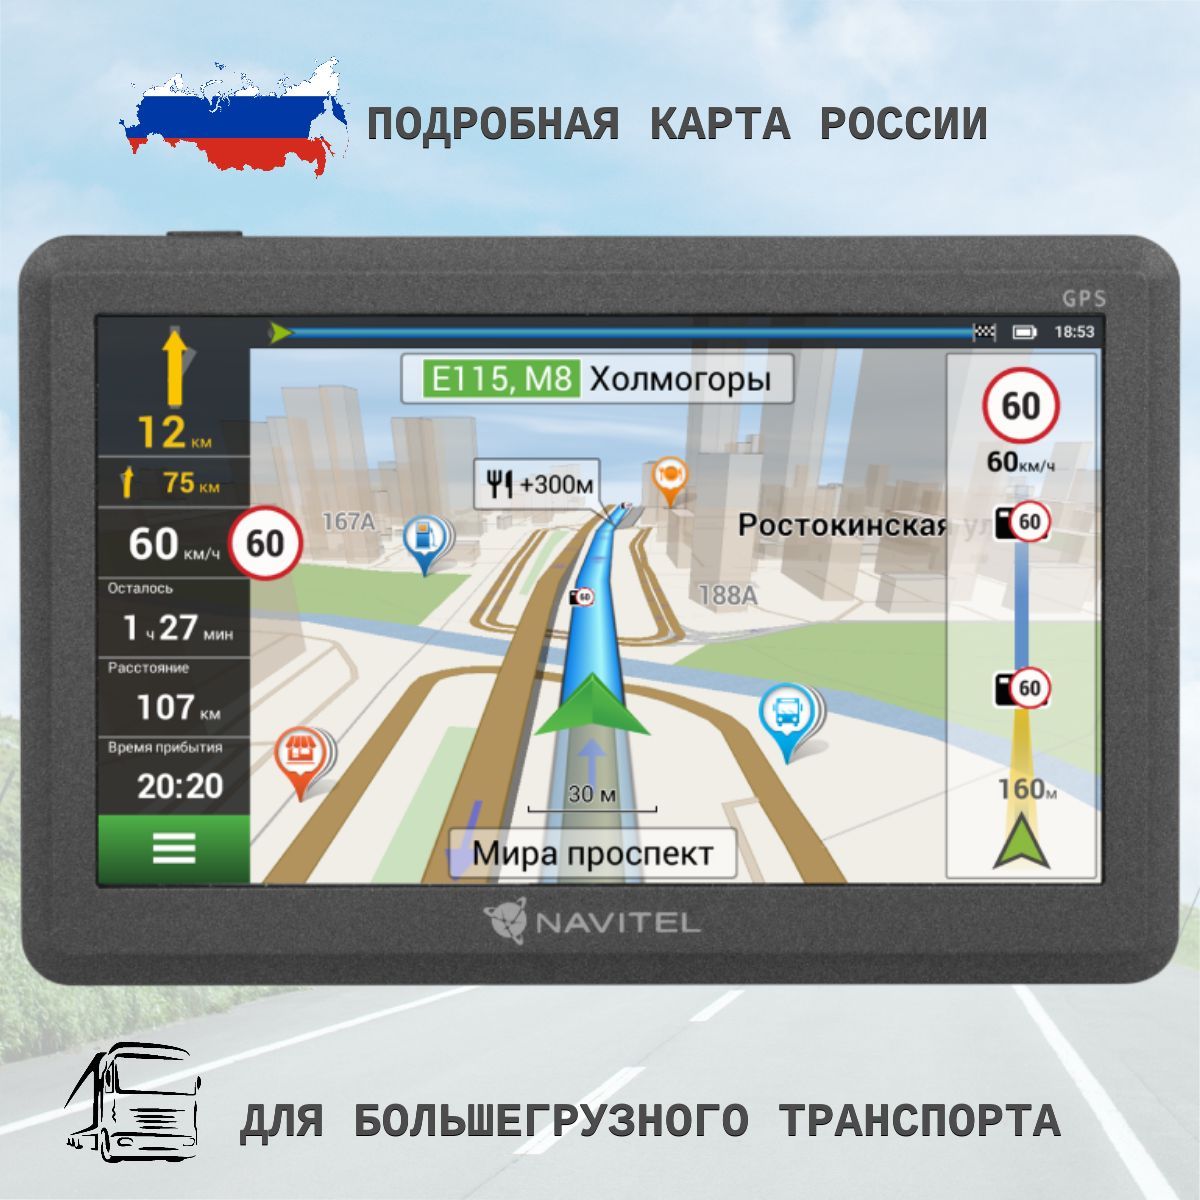 GPS-навигатор Navitel c500